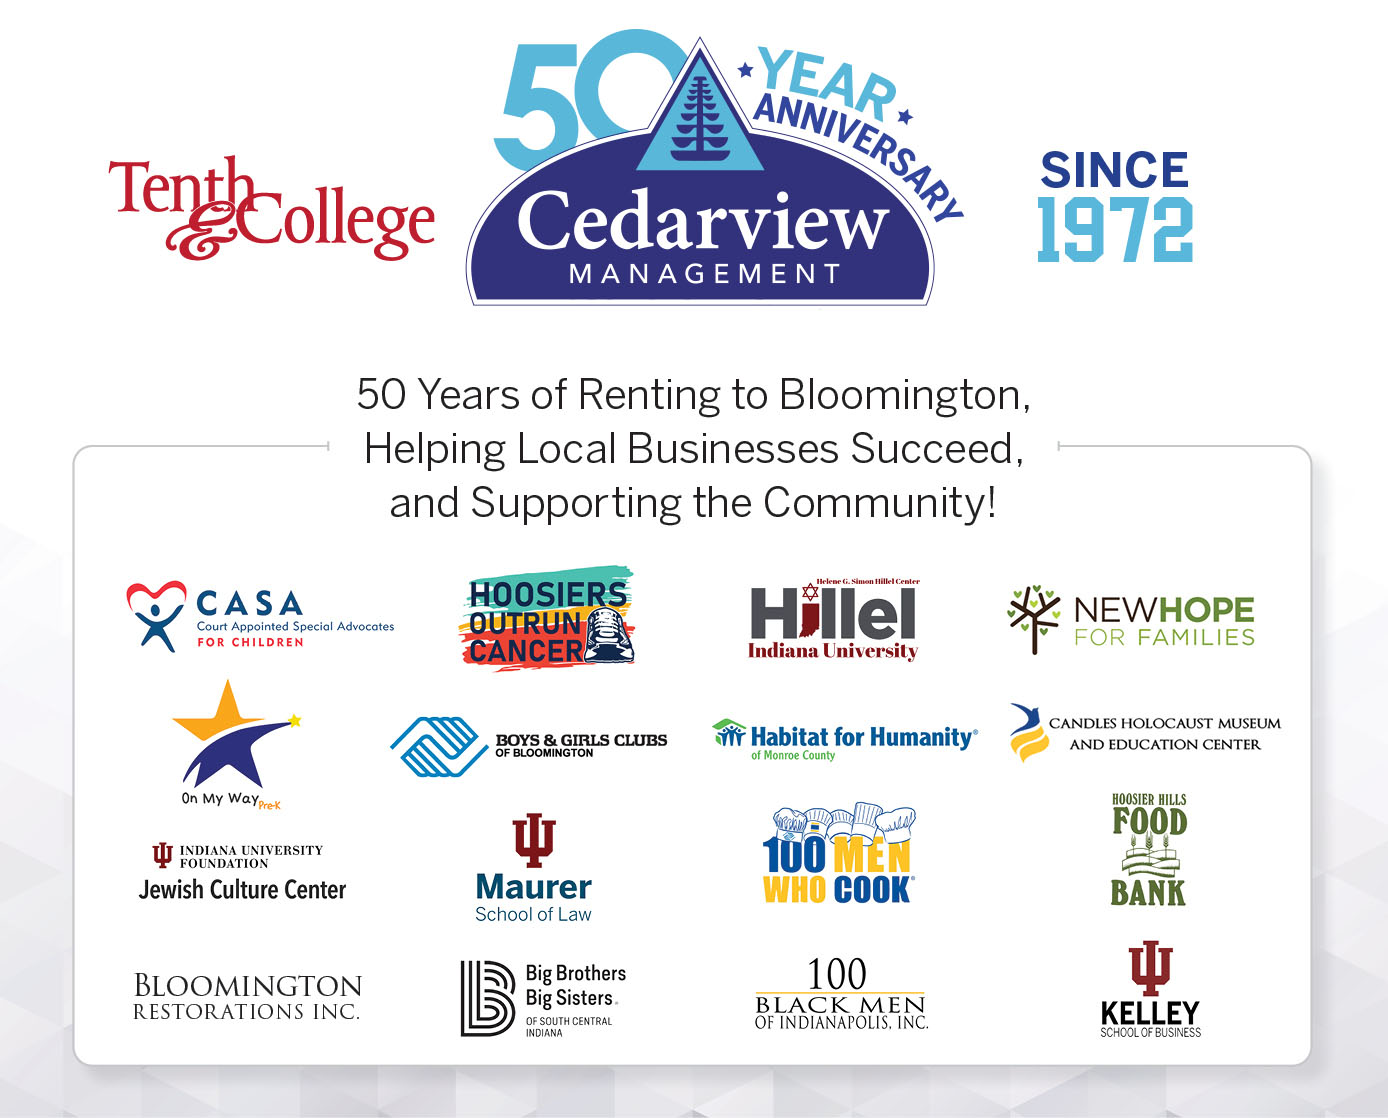 Cedarview Management 50 Year Anniversary